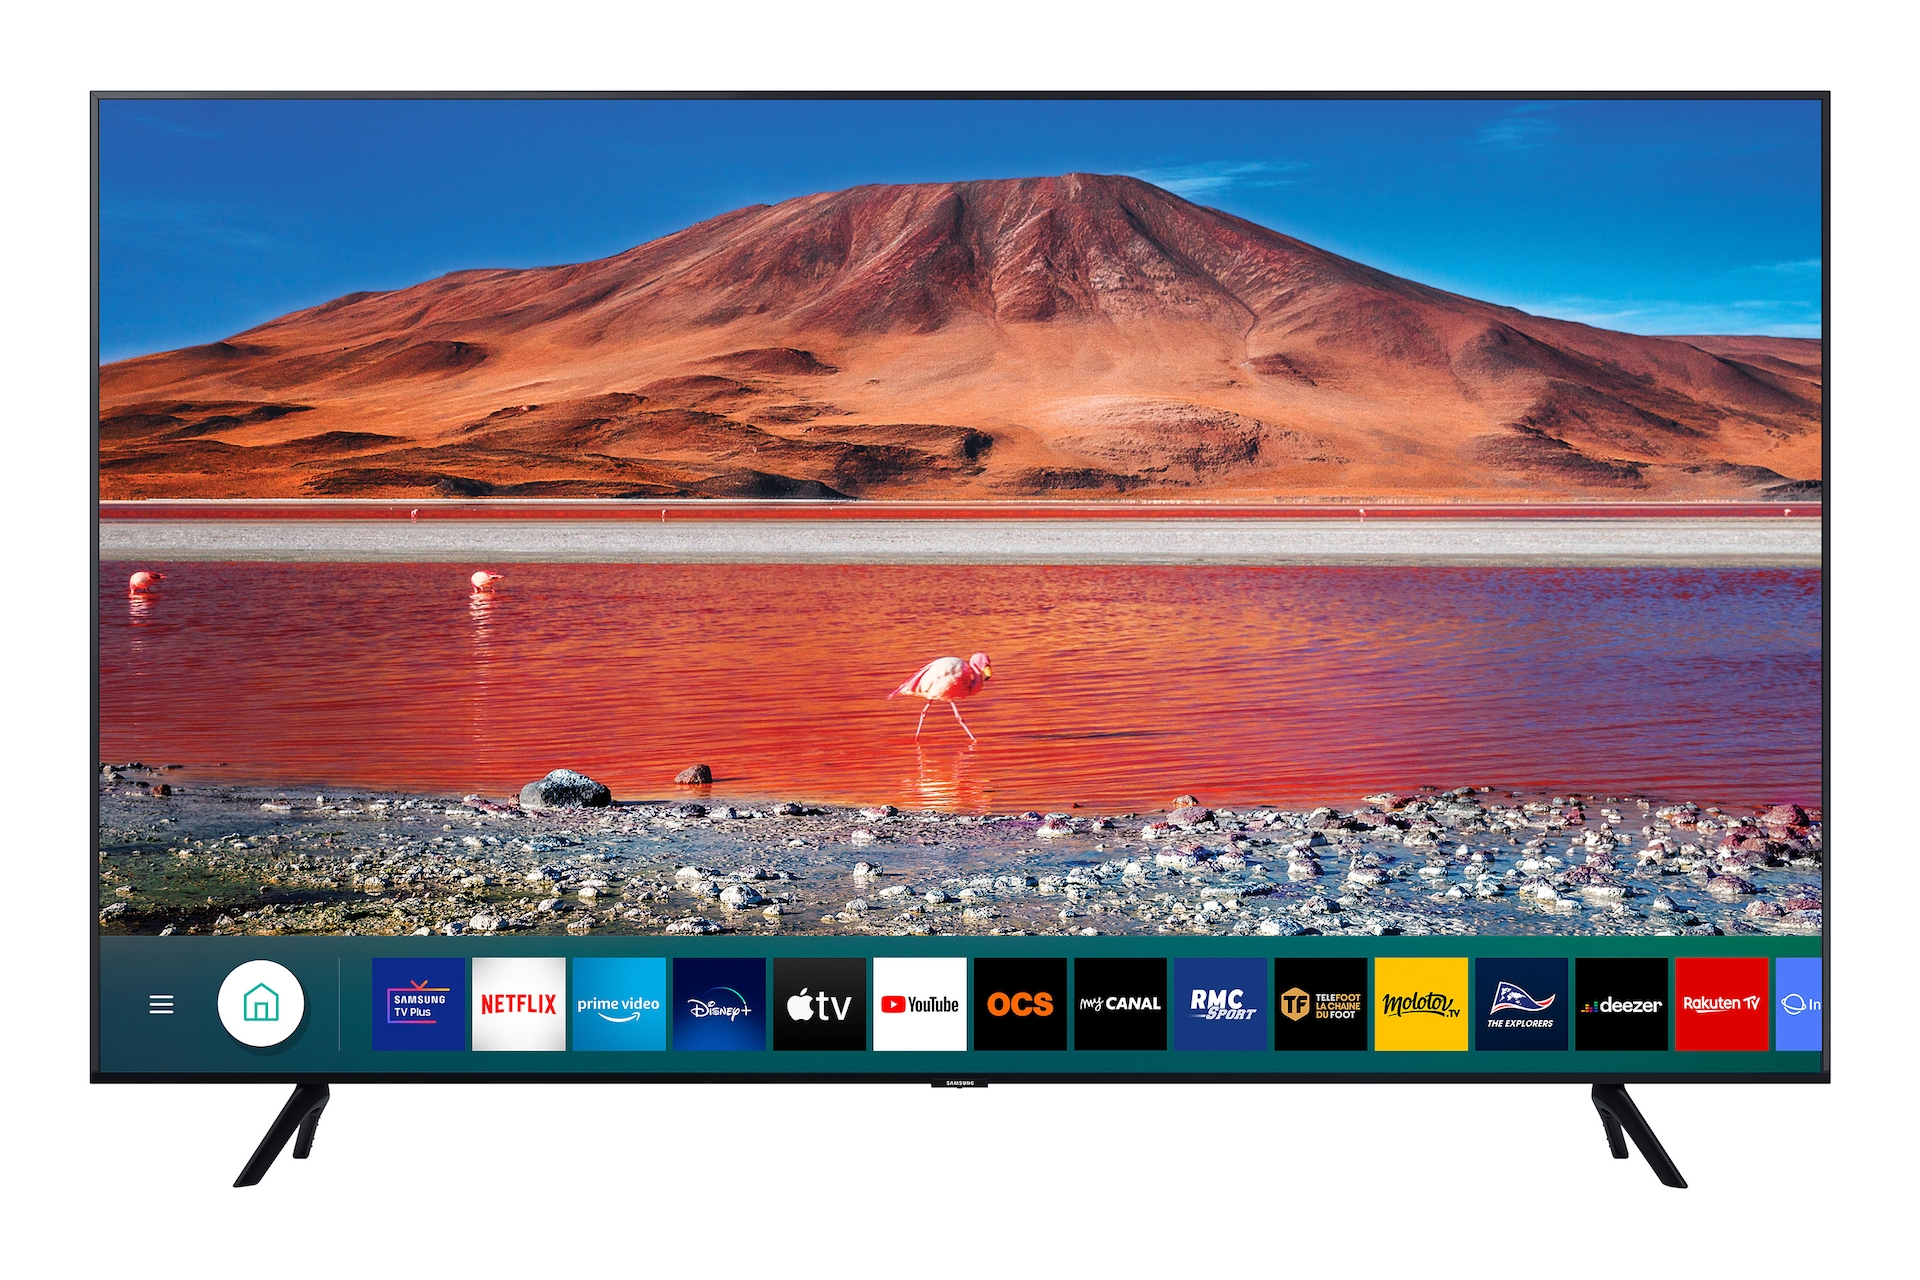 Samsung TV Crystal UHD 50TU7125, Image, Achat, prix, avis